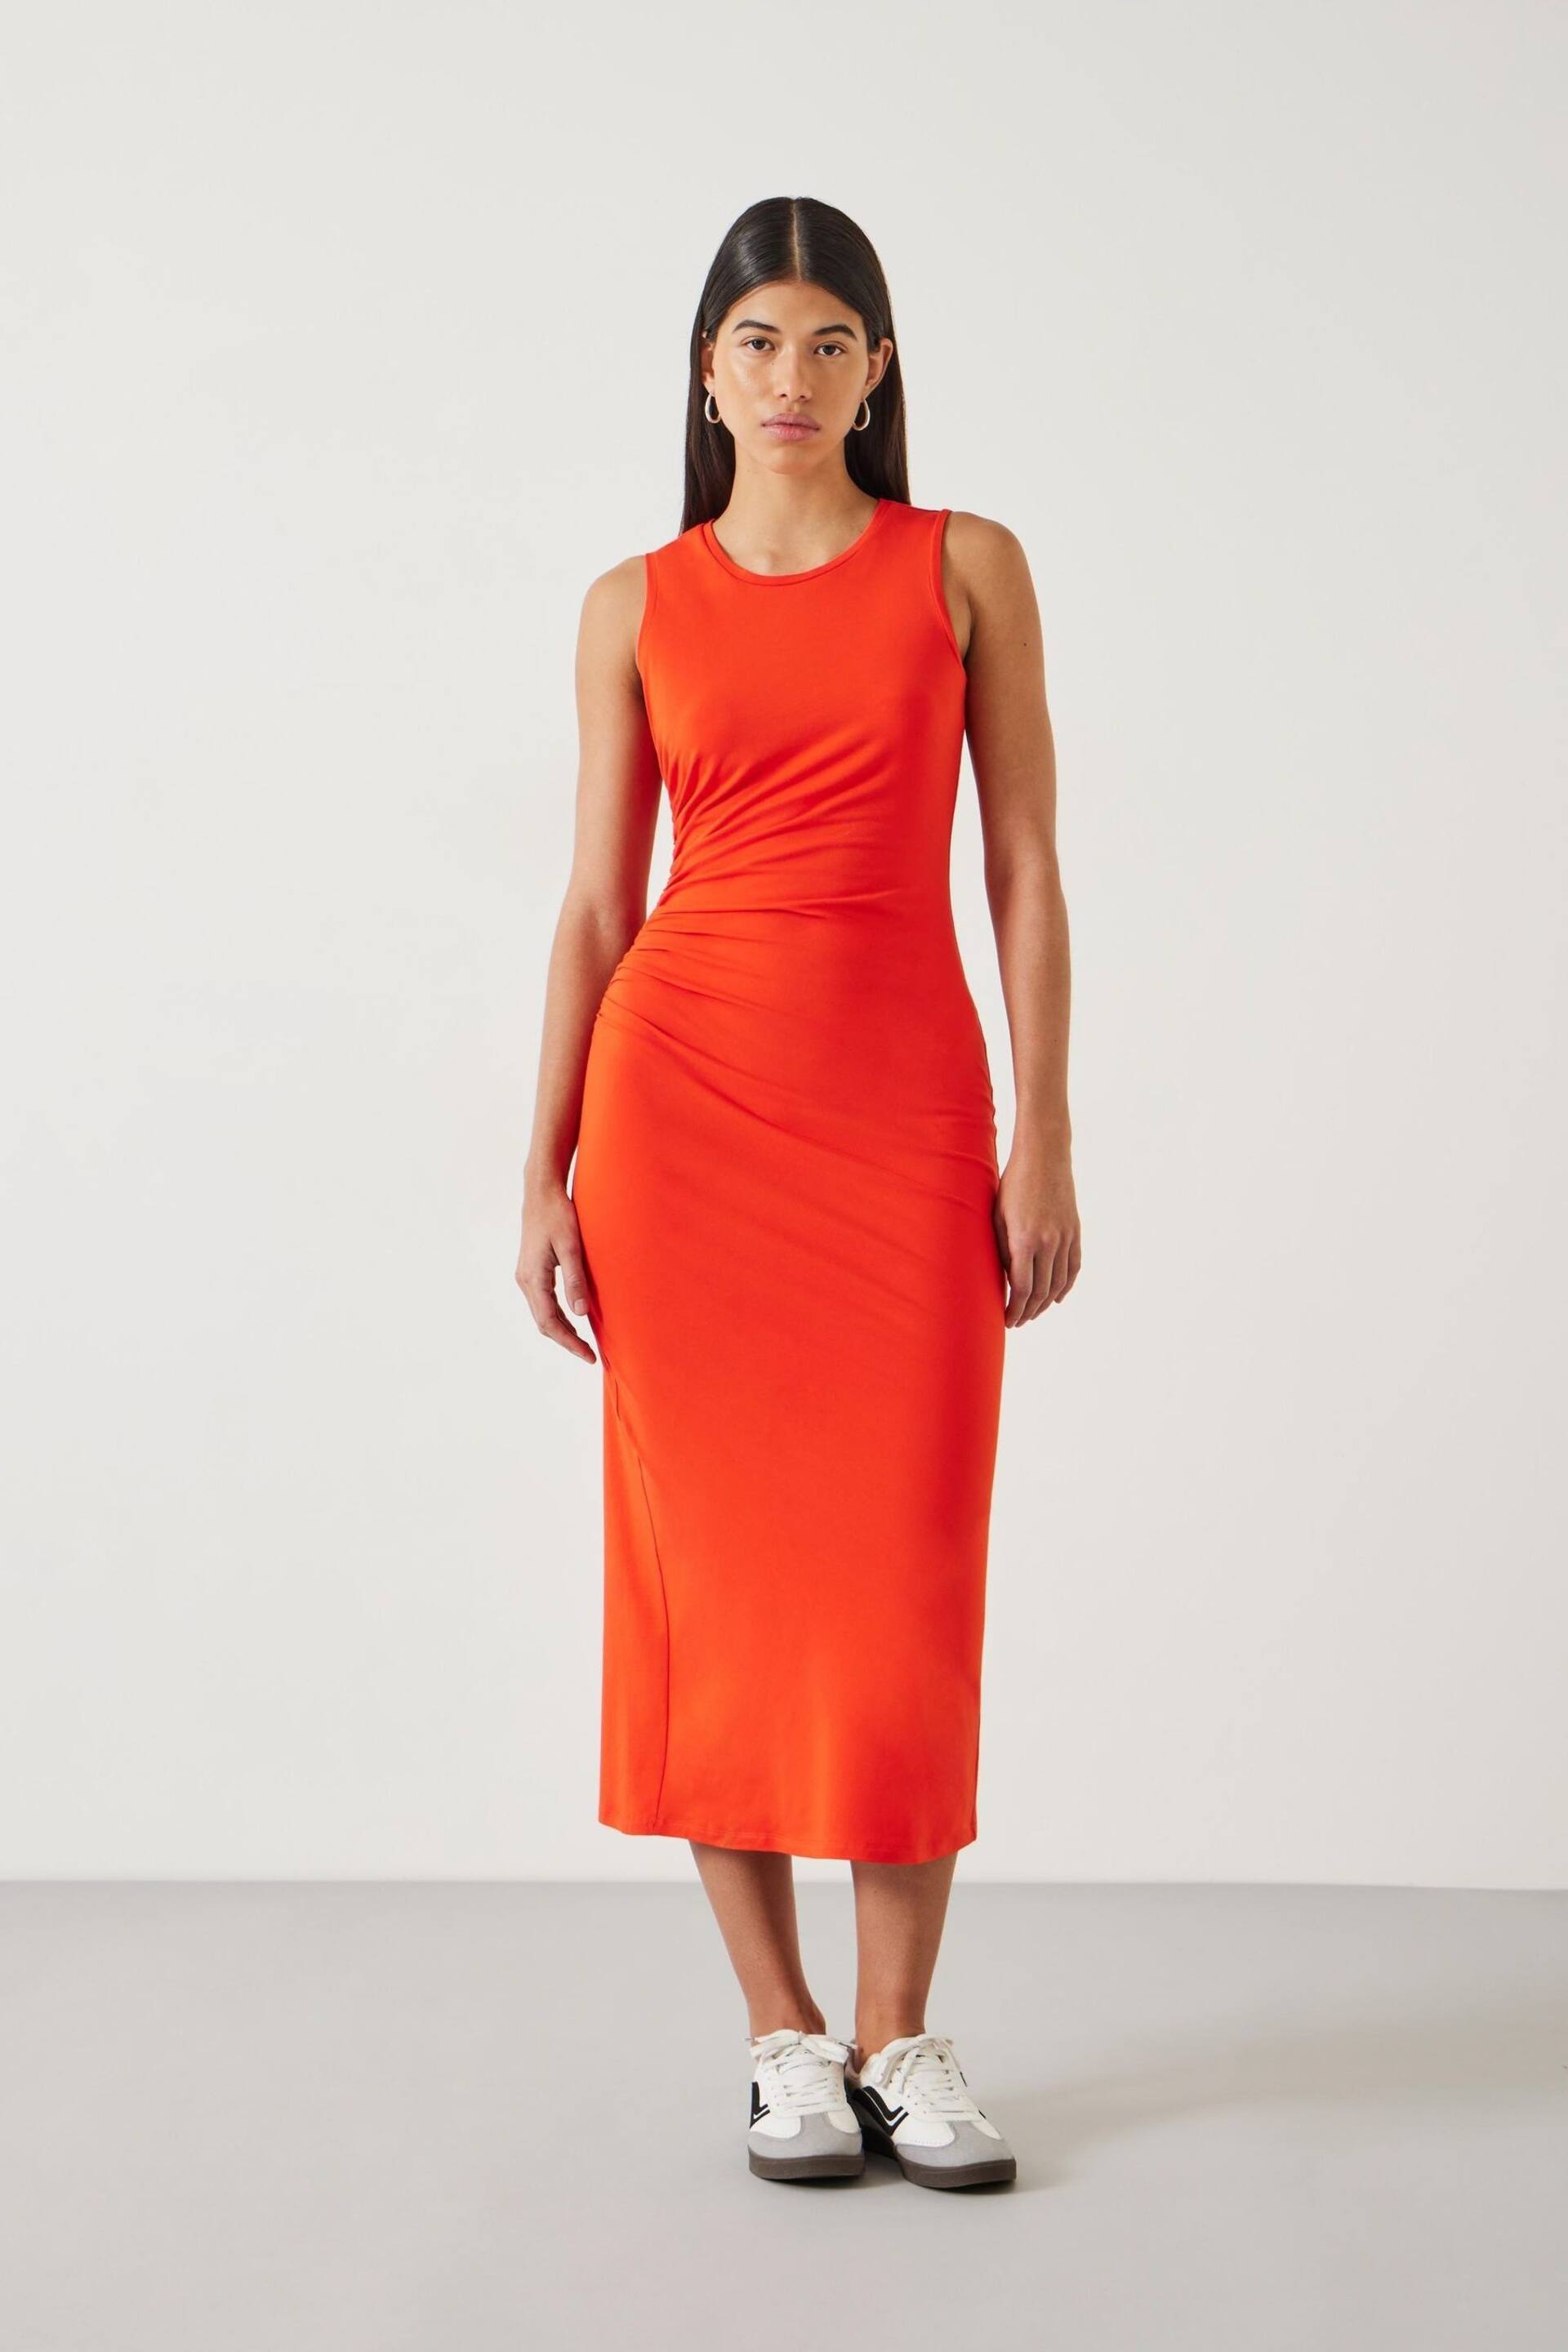 Hush Orange Sleeveless Judy Jersey Midi Dress - Image 1 of 4